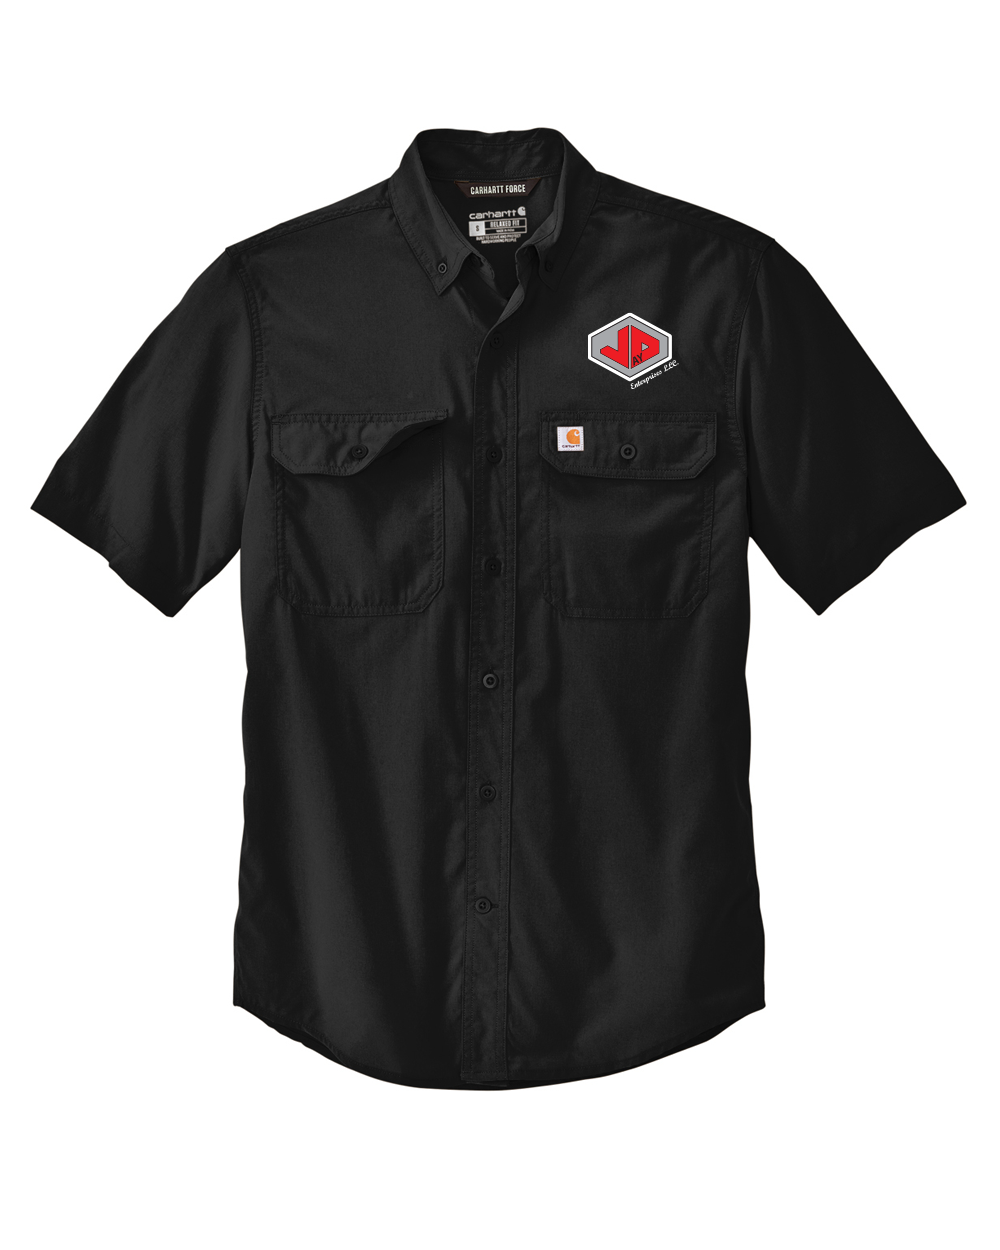 Jay D Enterprises - Carhartt Force Solid Short Sleeve Shirt